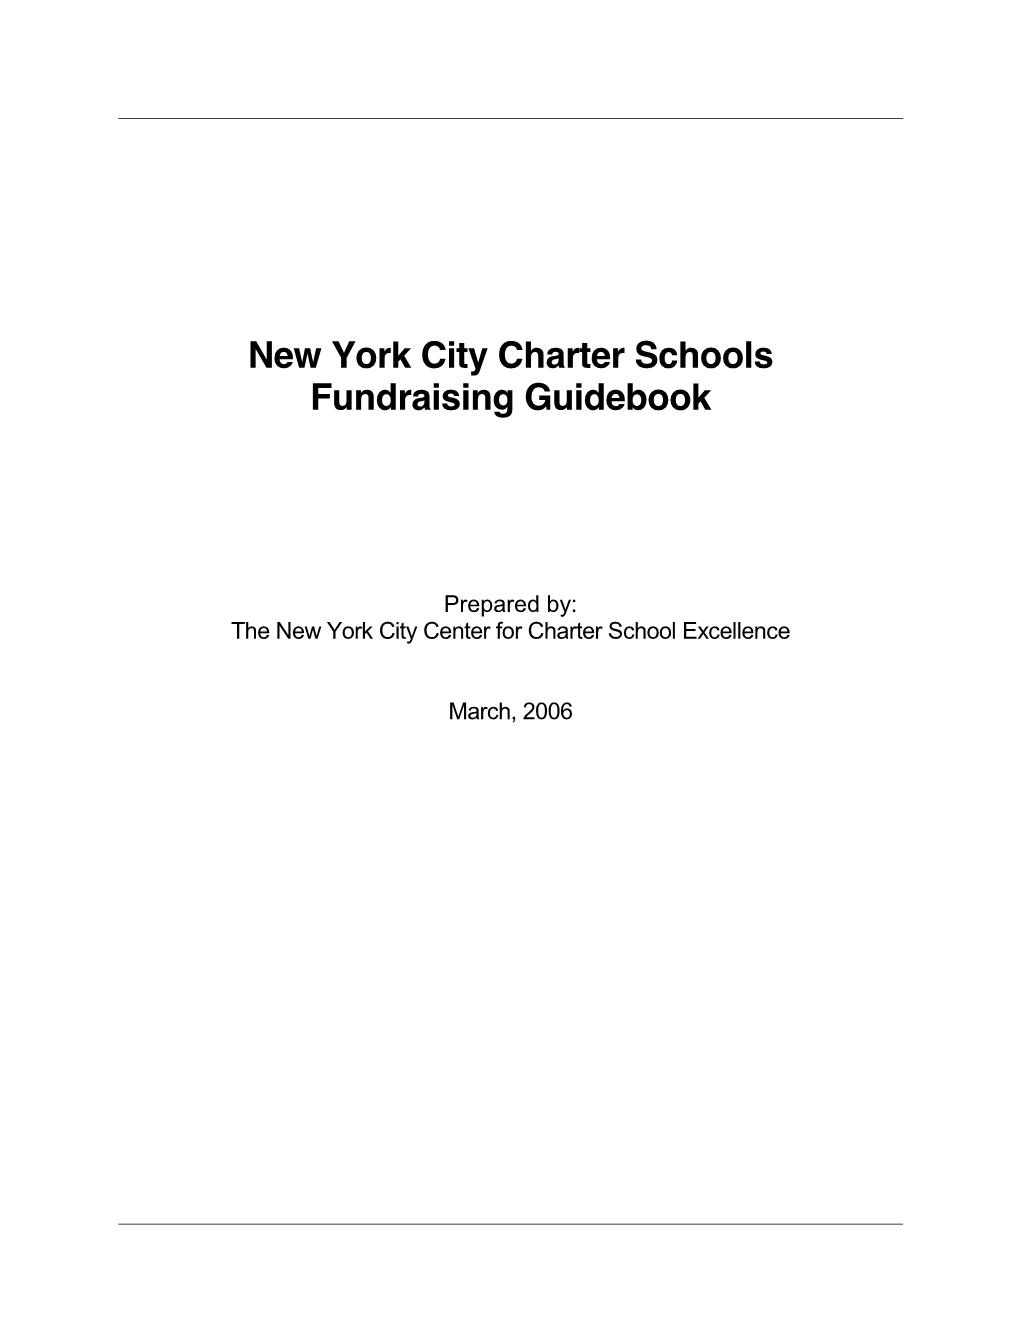 New York City Charter Schools Fundraising Guidebook